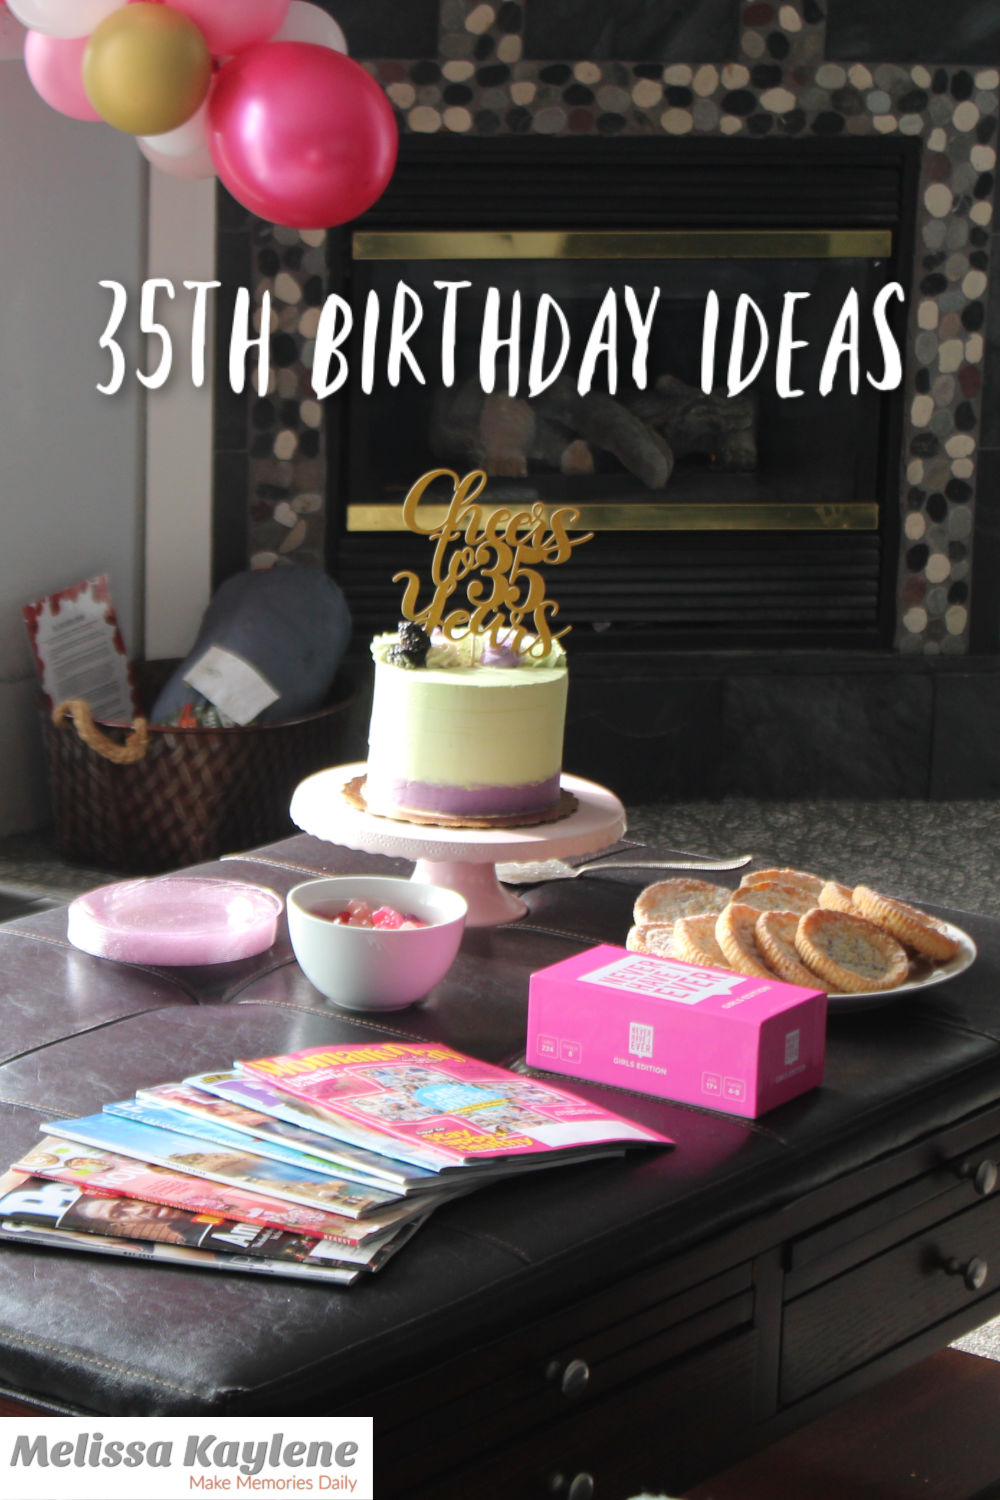 35th Birthday Ideas and Tips - Melissa Kaylene